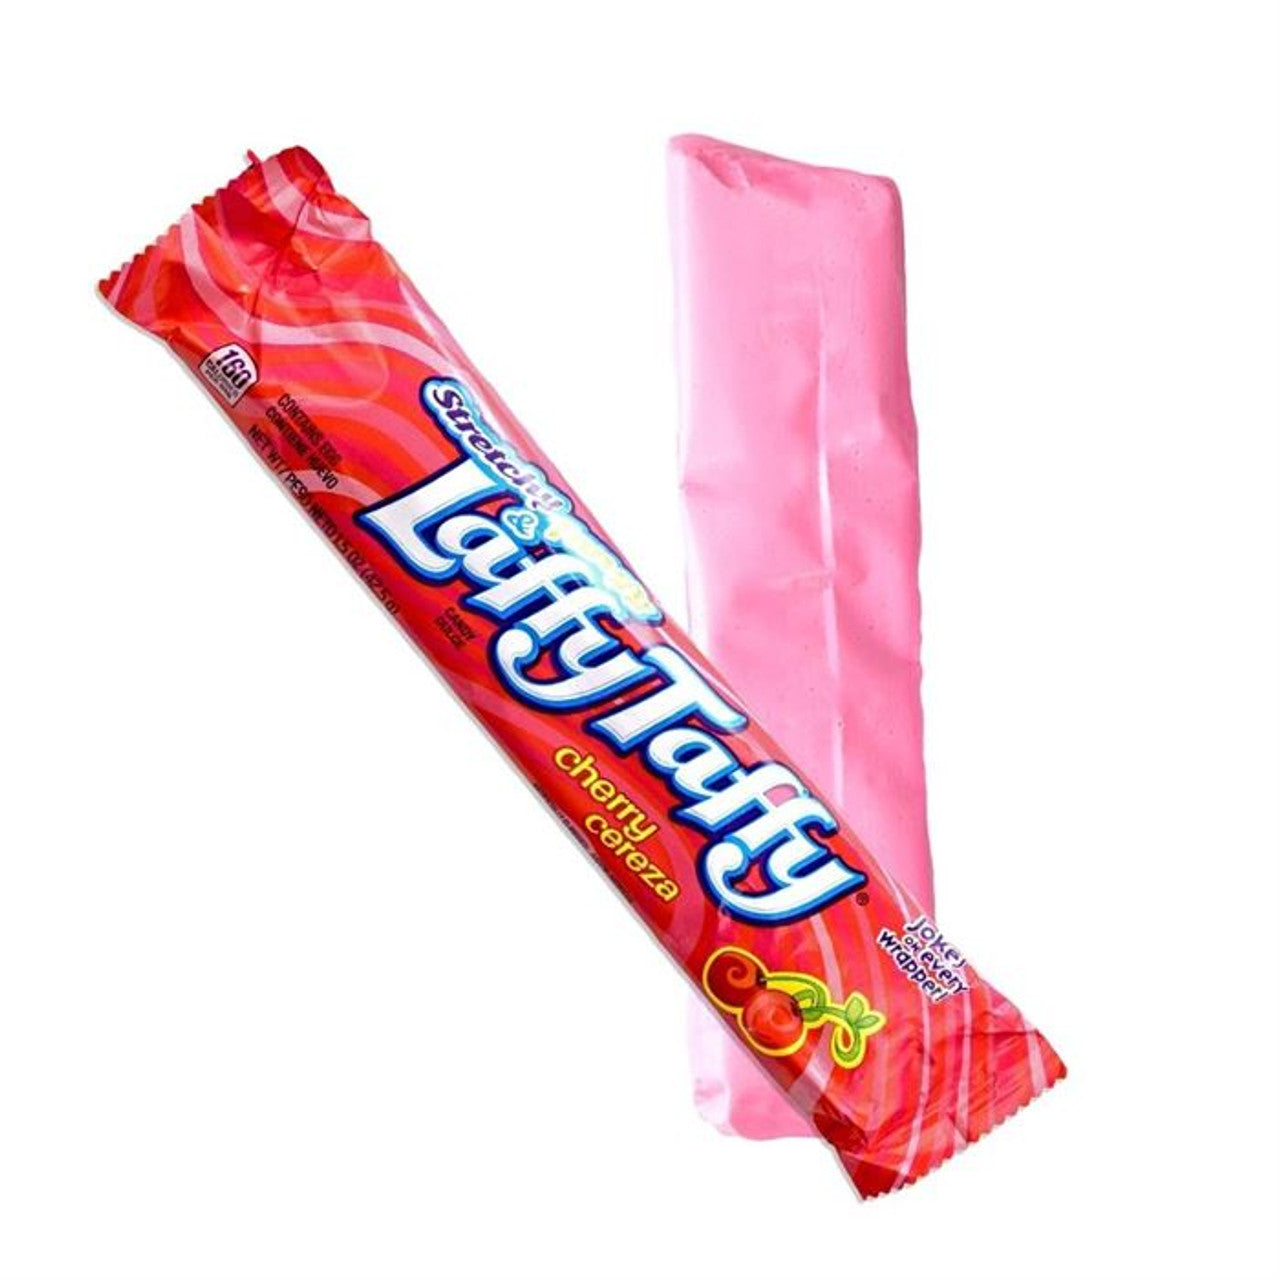 Laffy Taffy Cherry Candy - 1.5 oz.